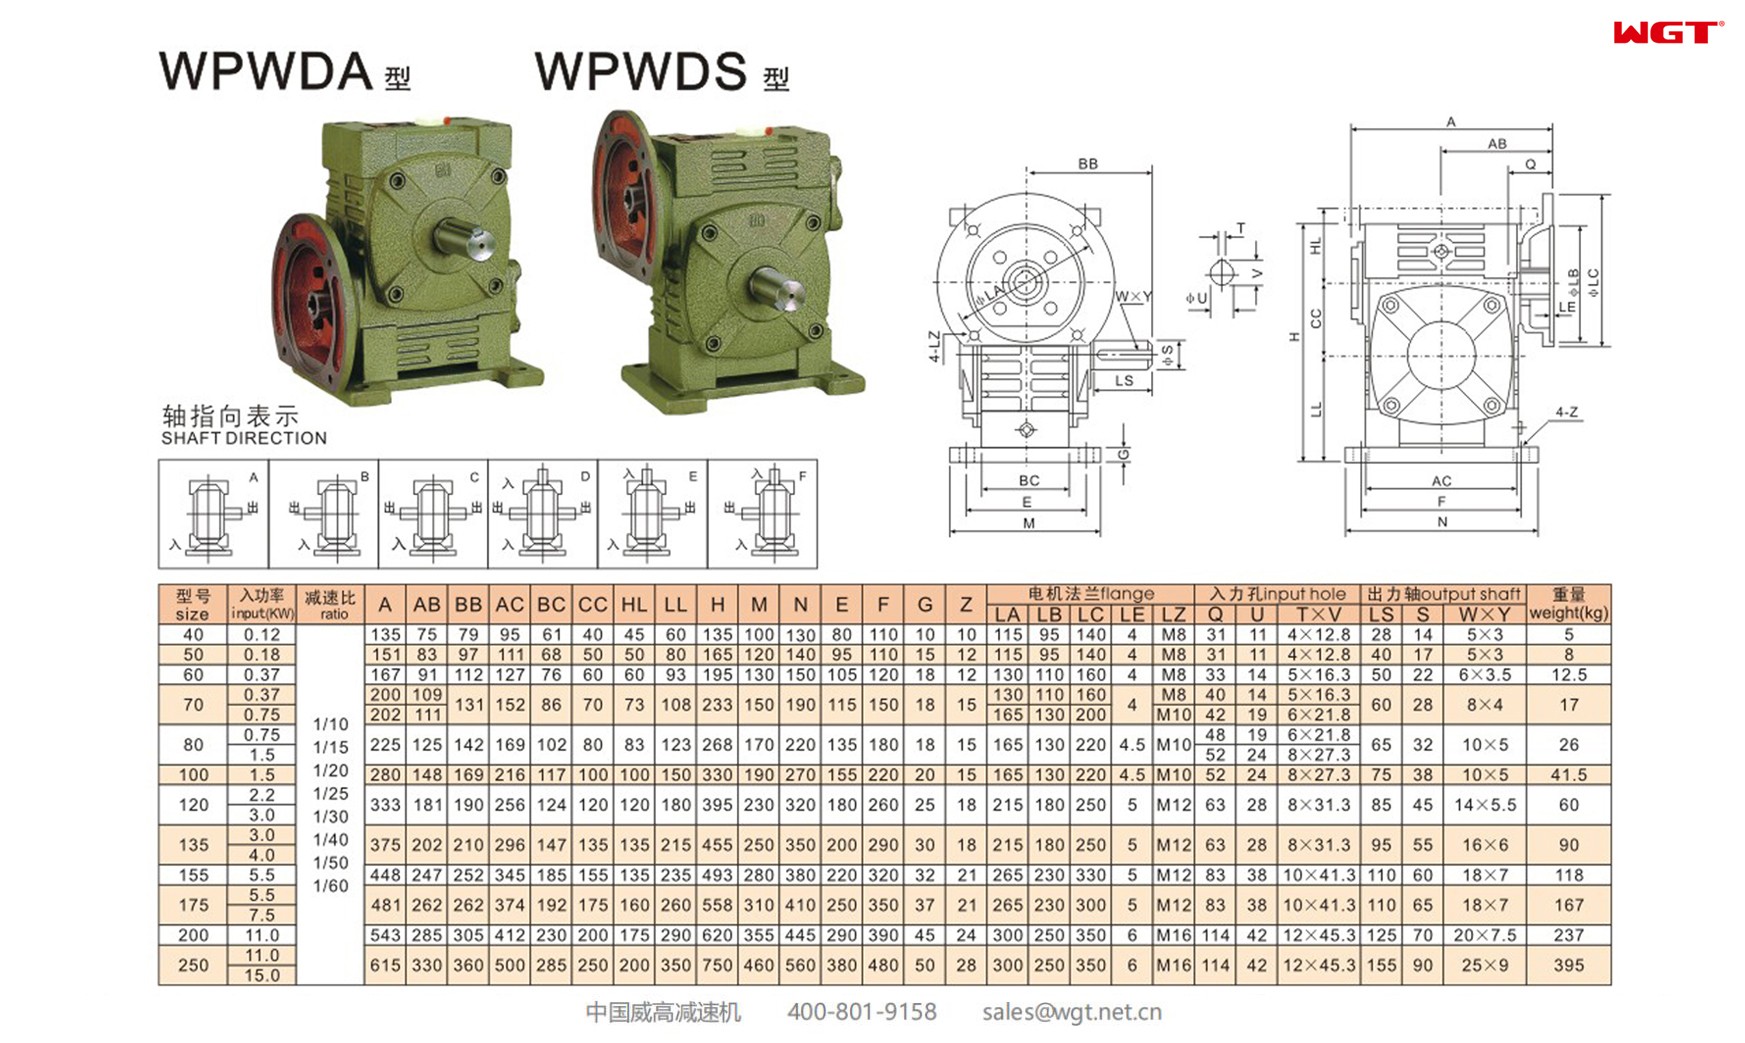 WPWDS50 worm gear reducer universal speed reducer